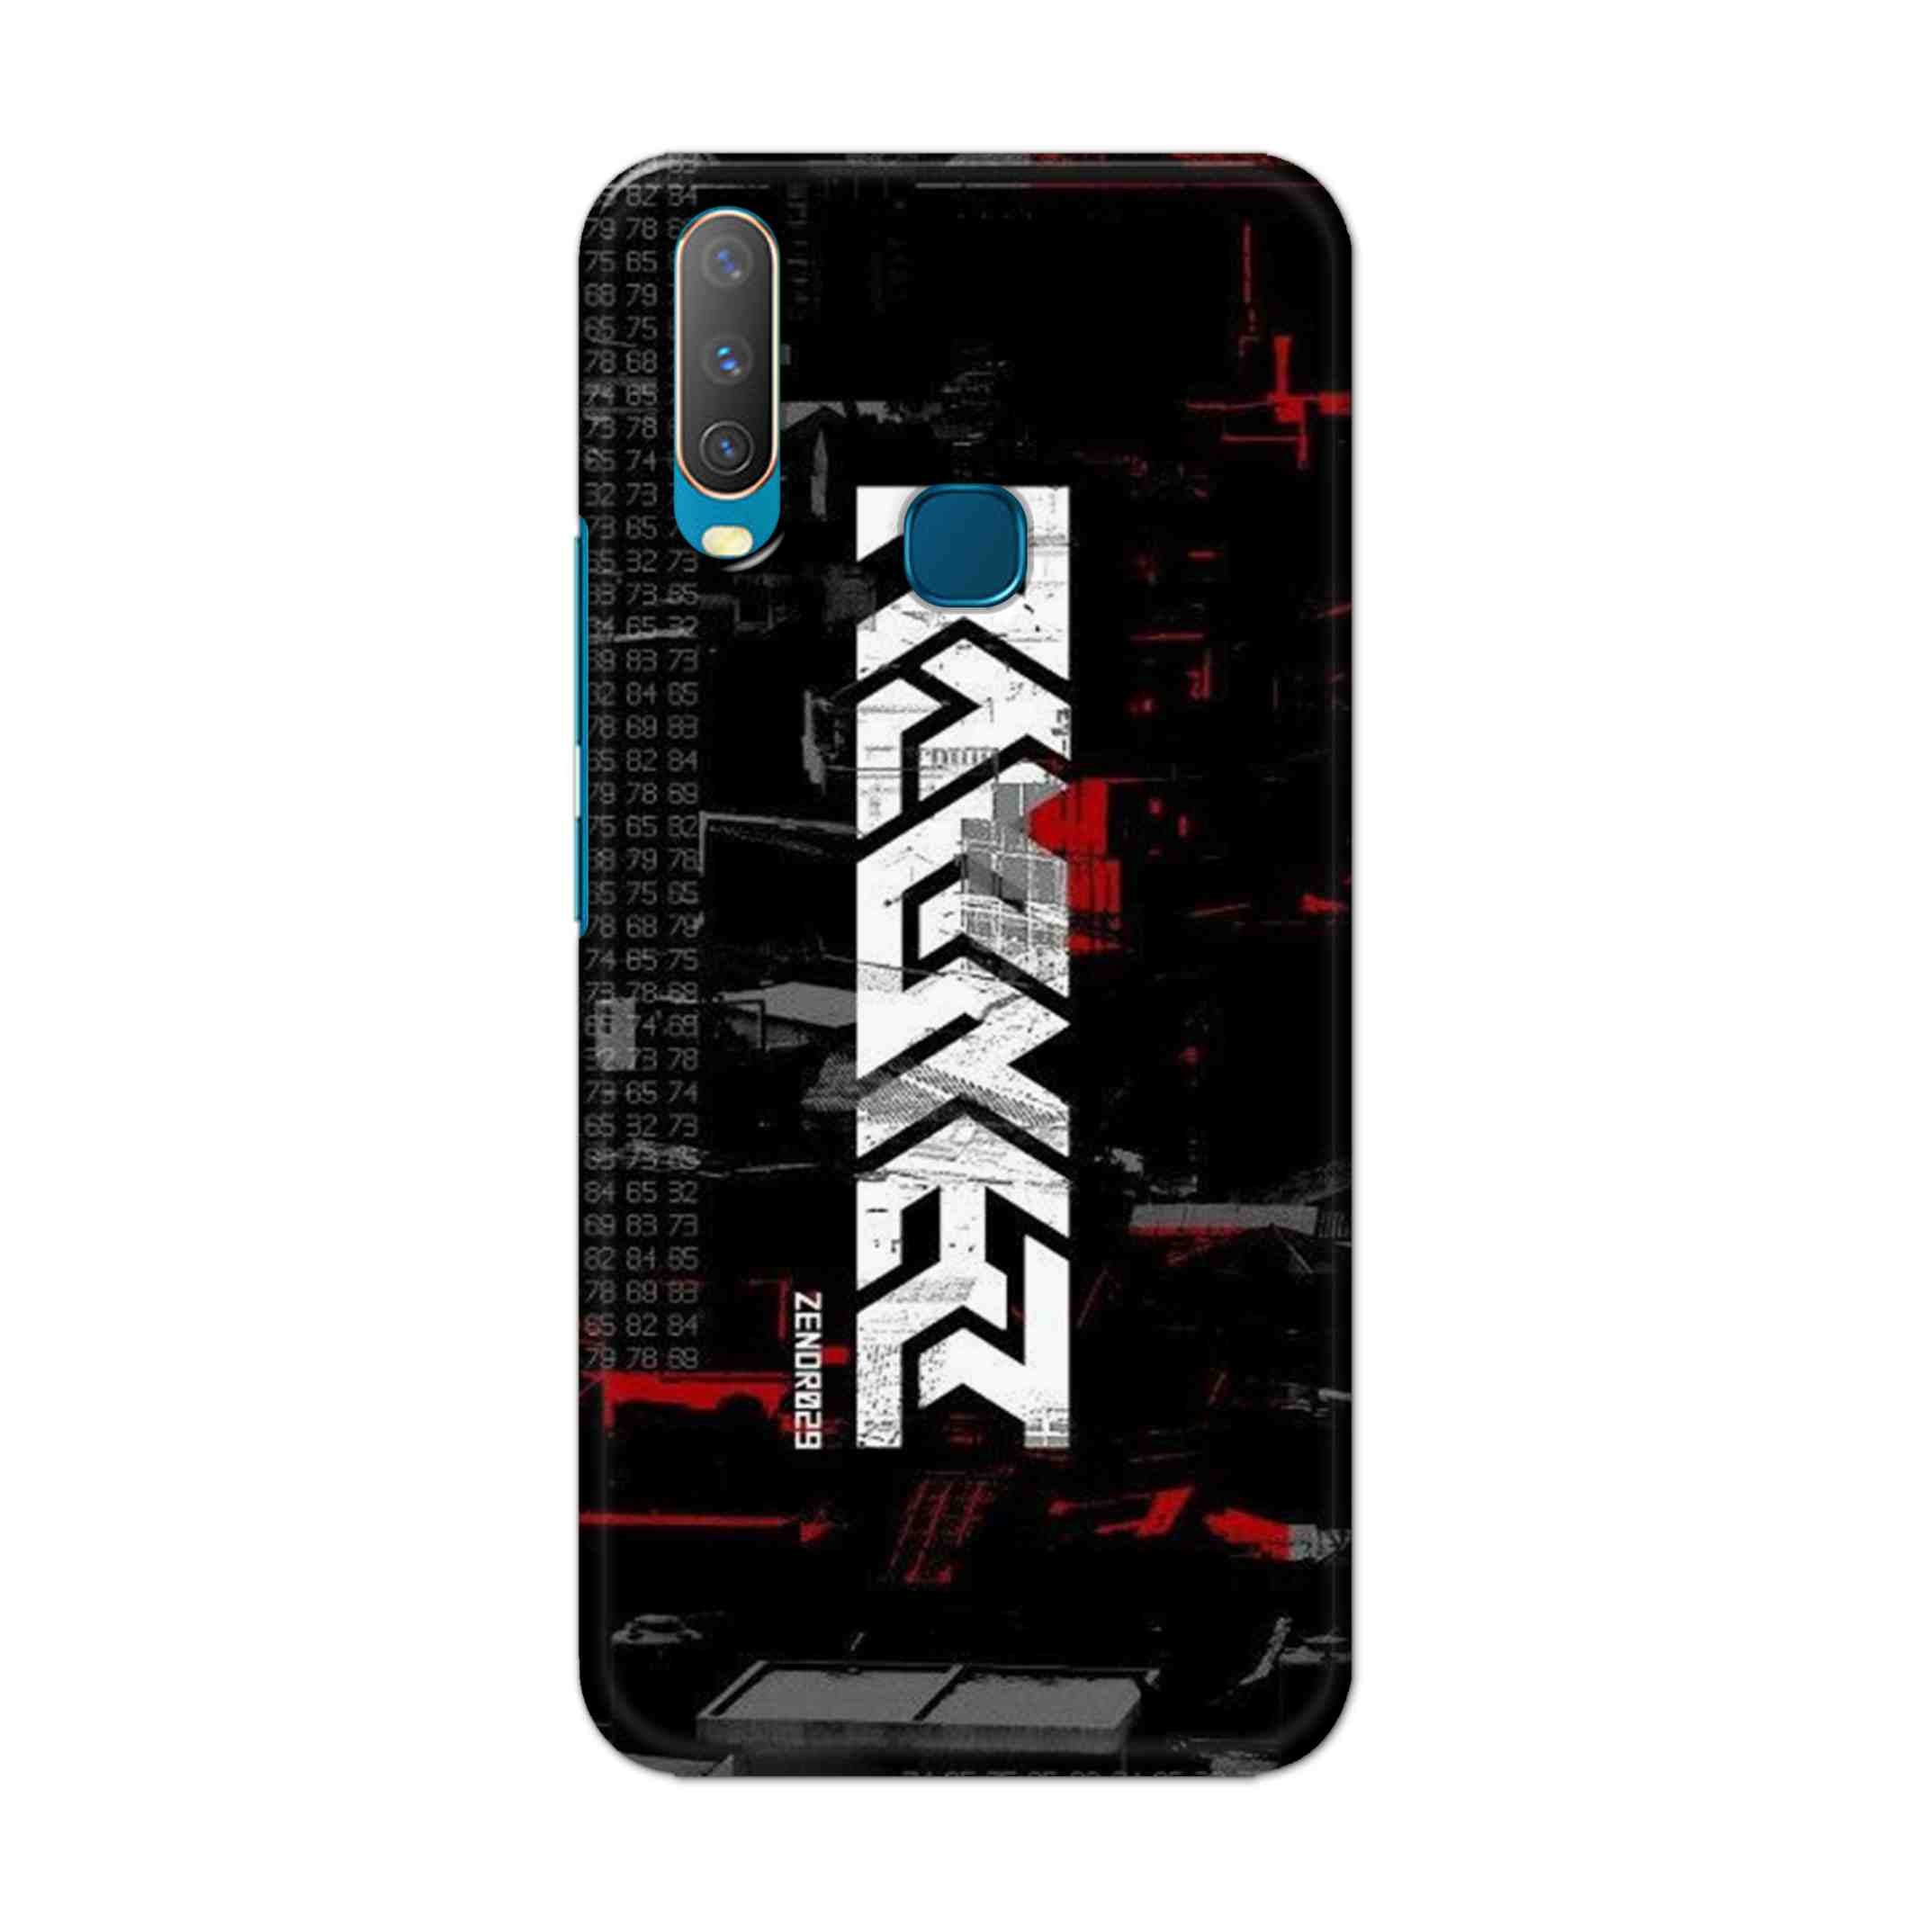 Buy Raxer Hard Back Mobile Phone Case Cover For Vivo Y17 / U10 Online